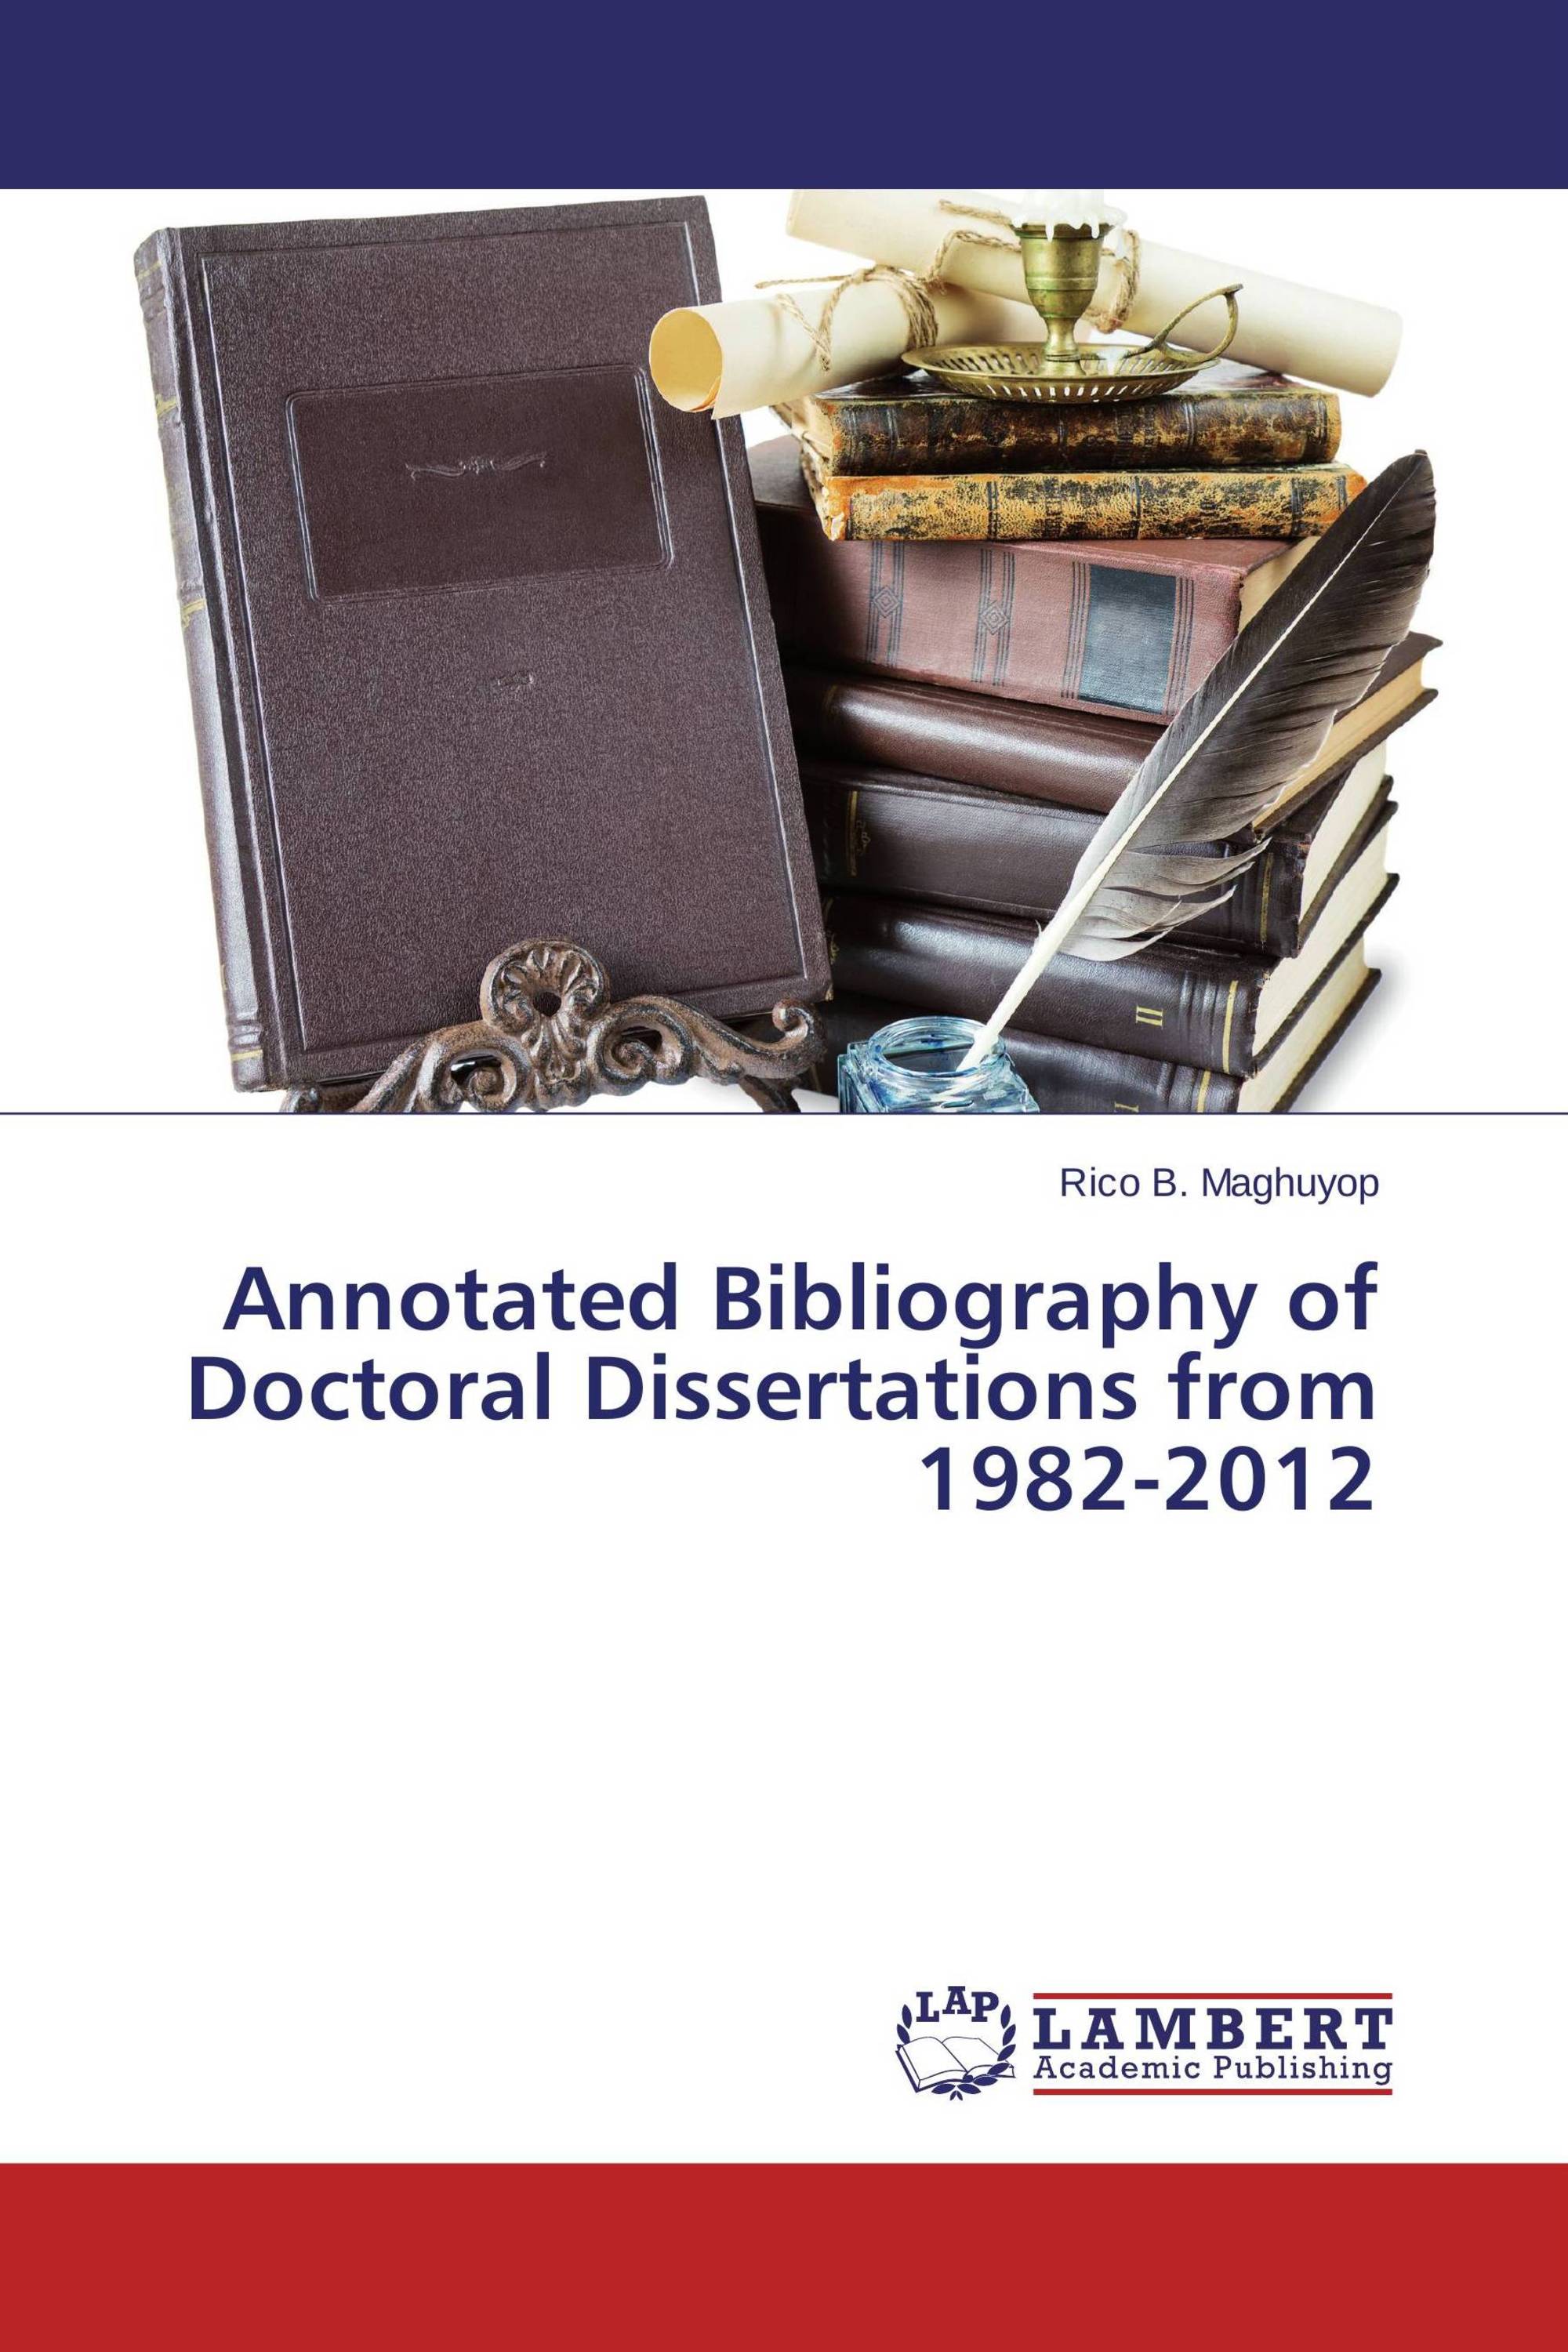 find doctoral dissertations